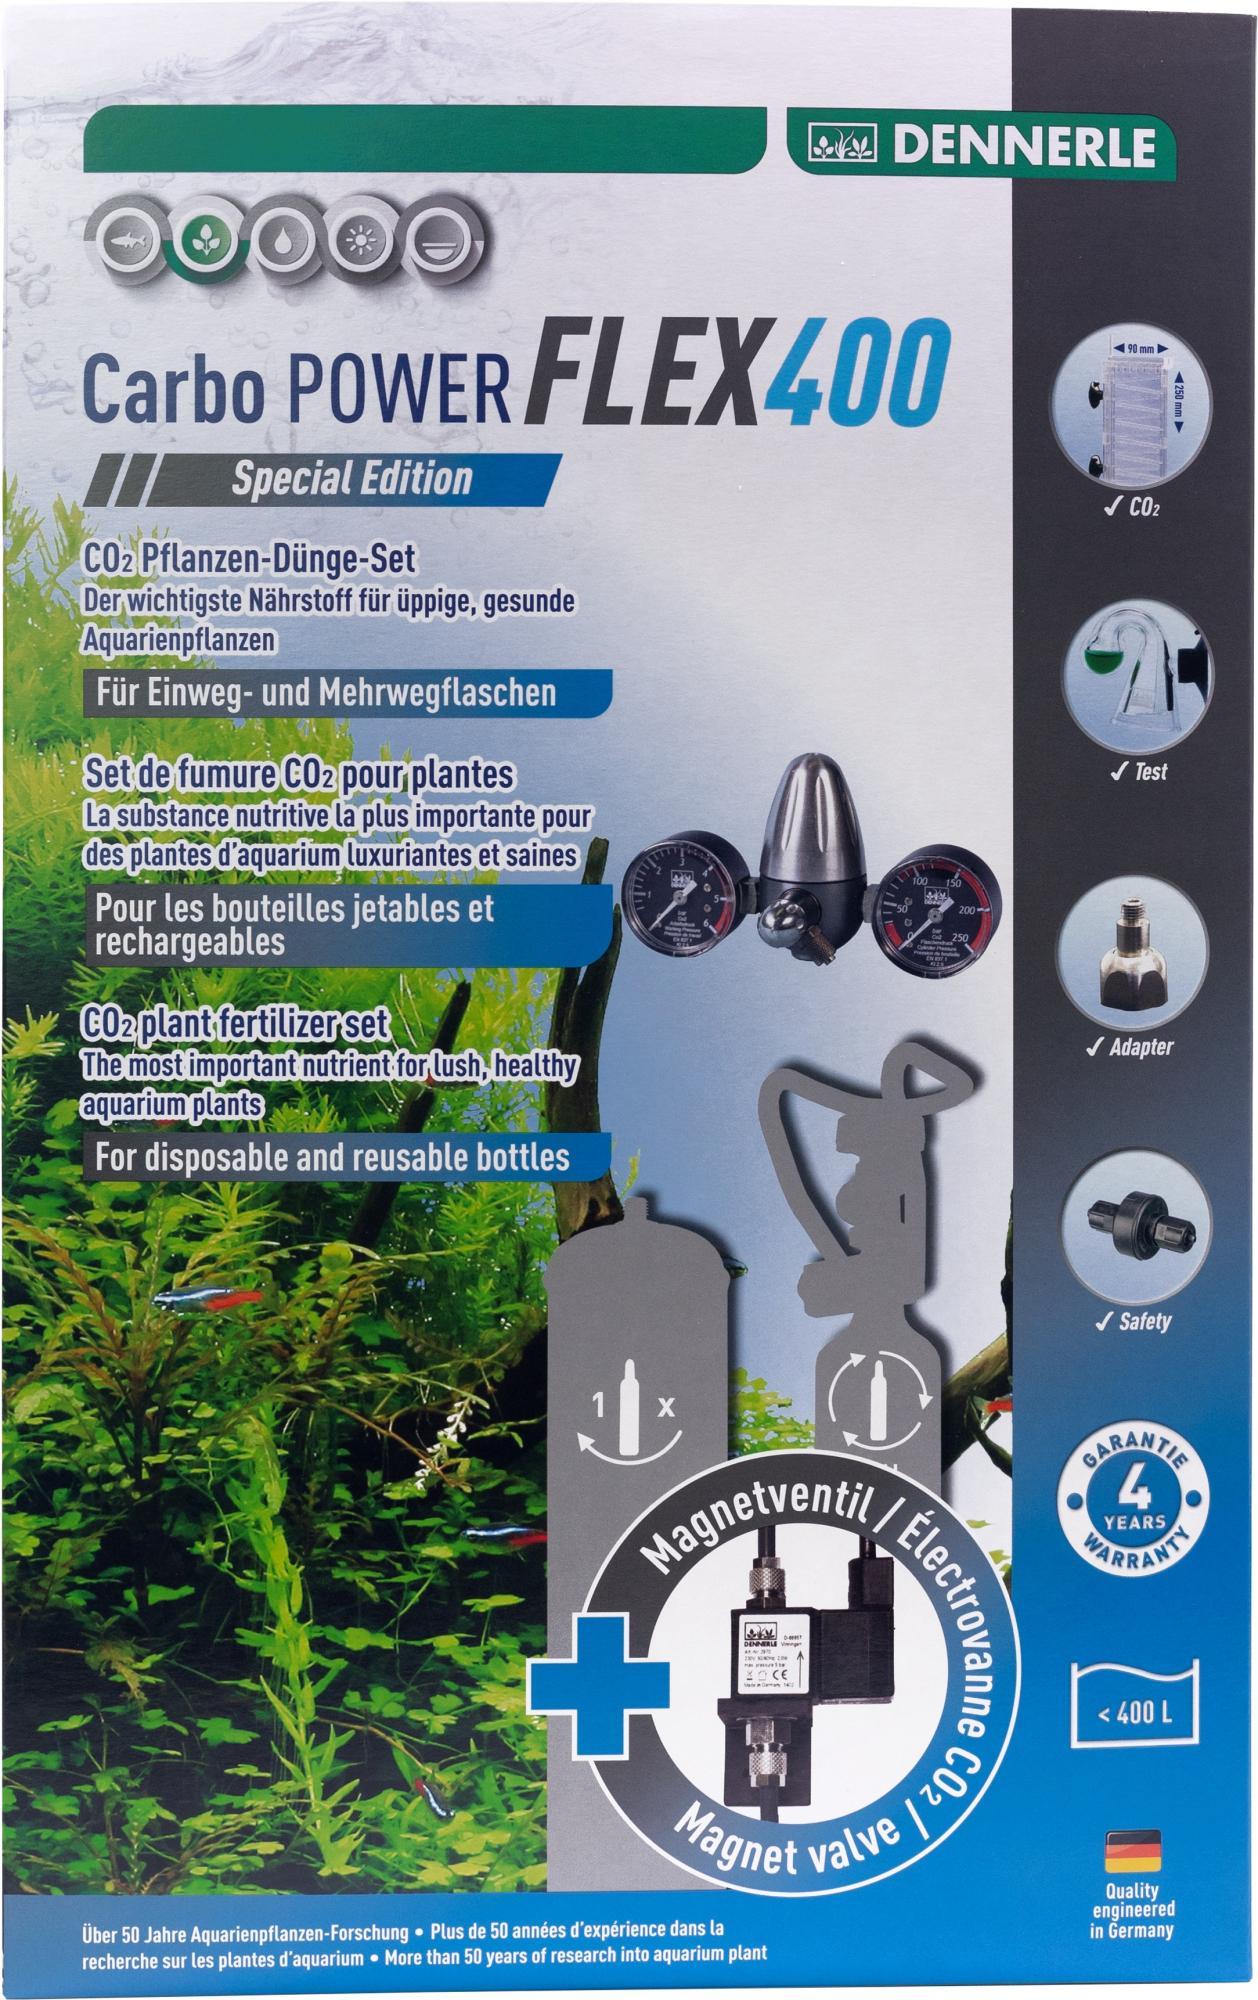 Dennerle CO Kit Carbo Power Flex 400 en flex 400 special edition voor wegwerp flessen